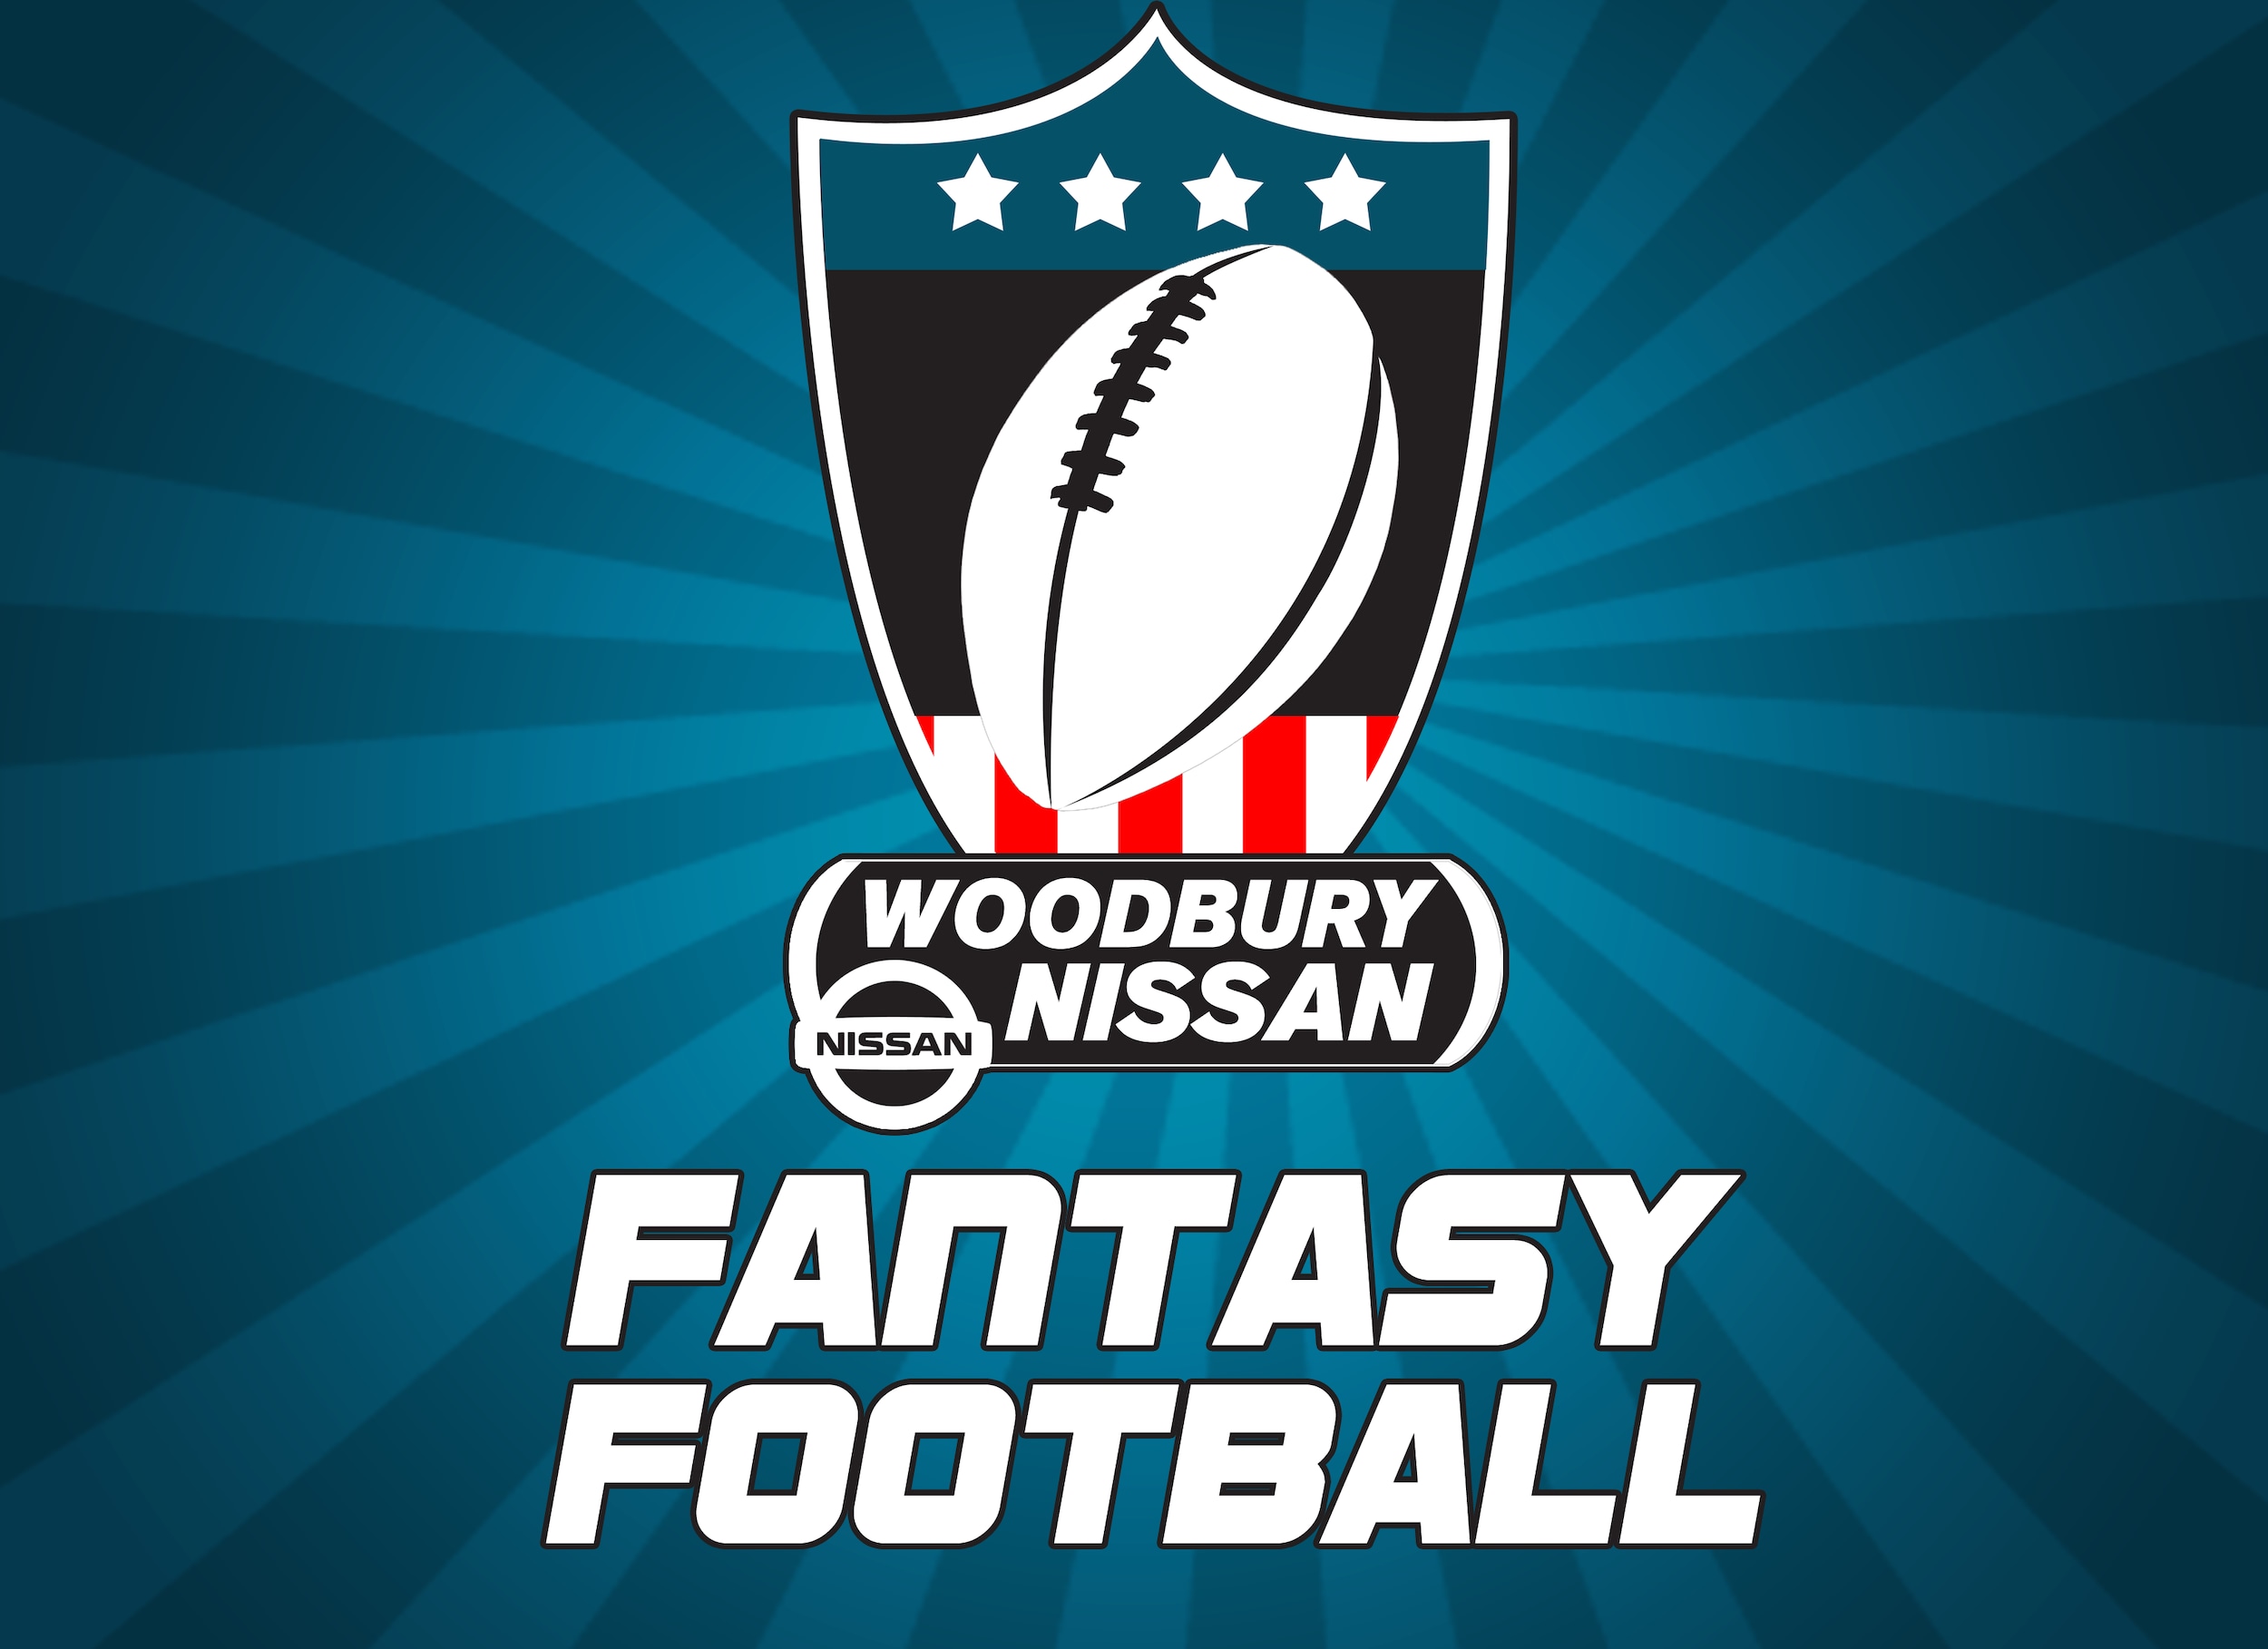 Woodbury nissan fantasy football